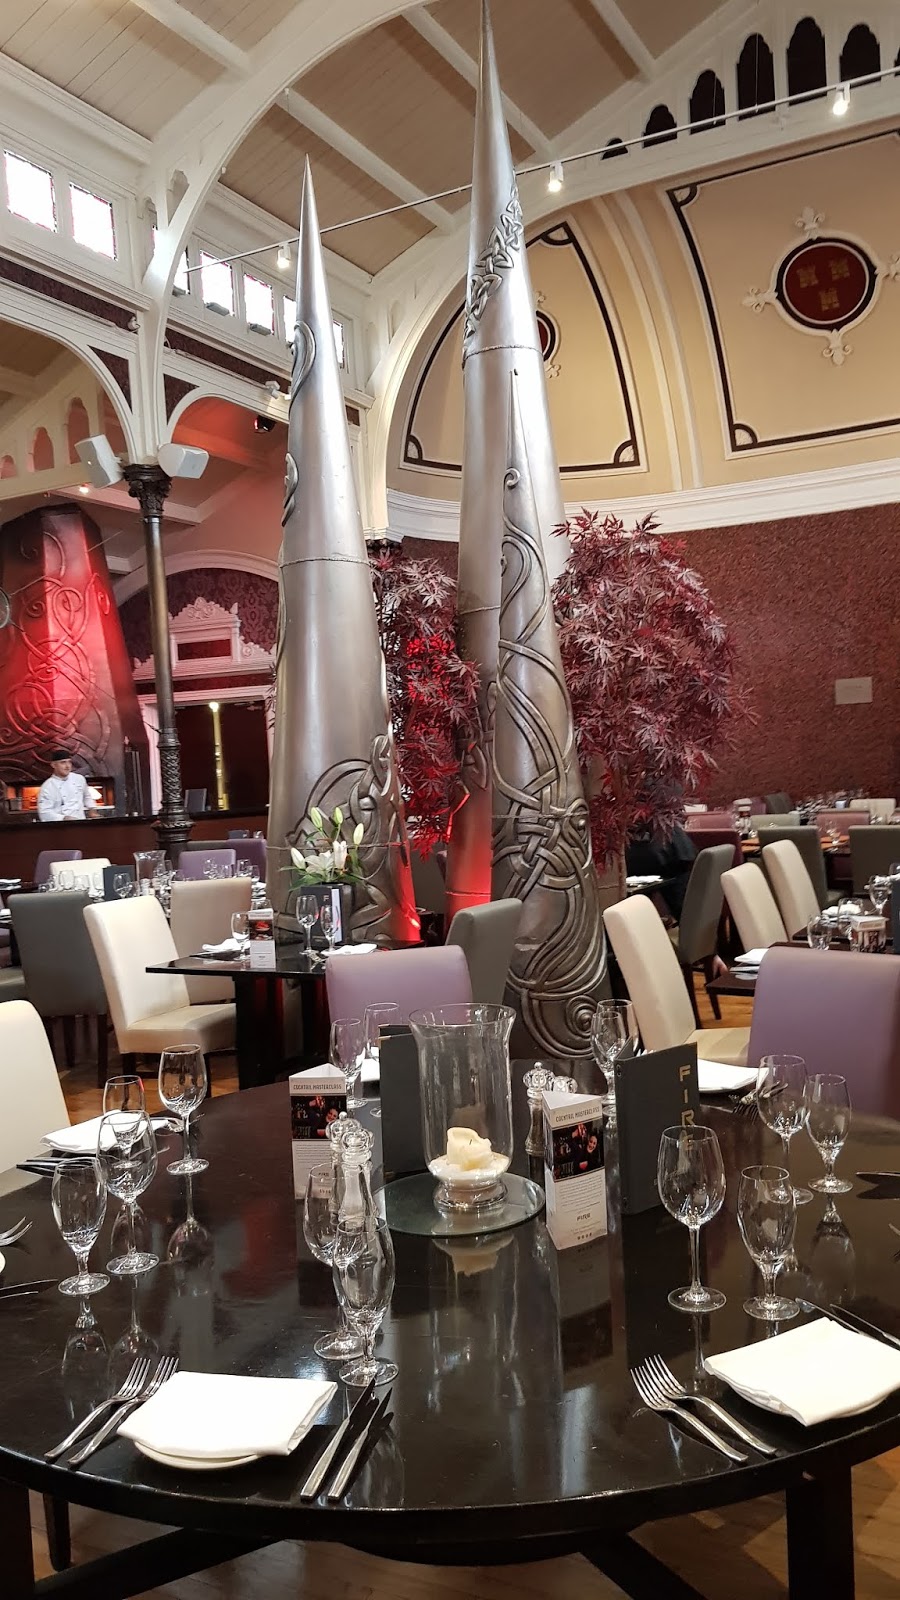 The interior of Fire, a restaurant in Dublin city centre